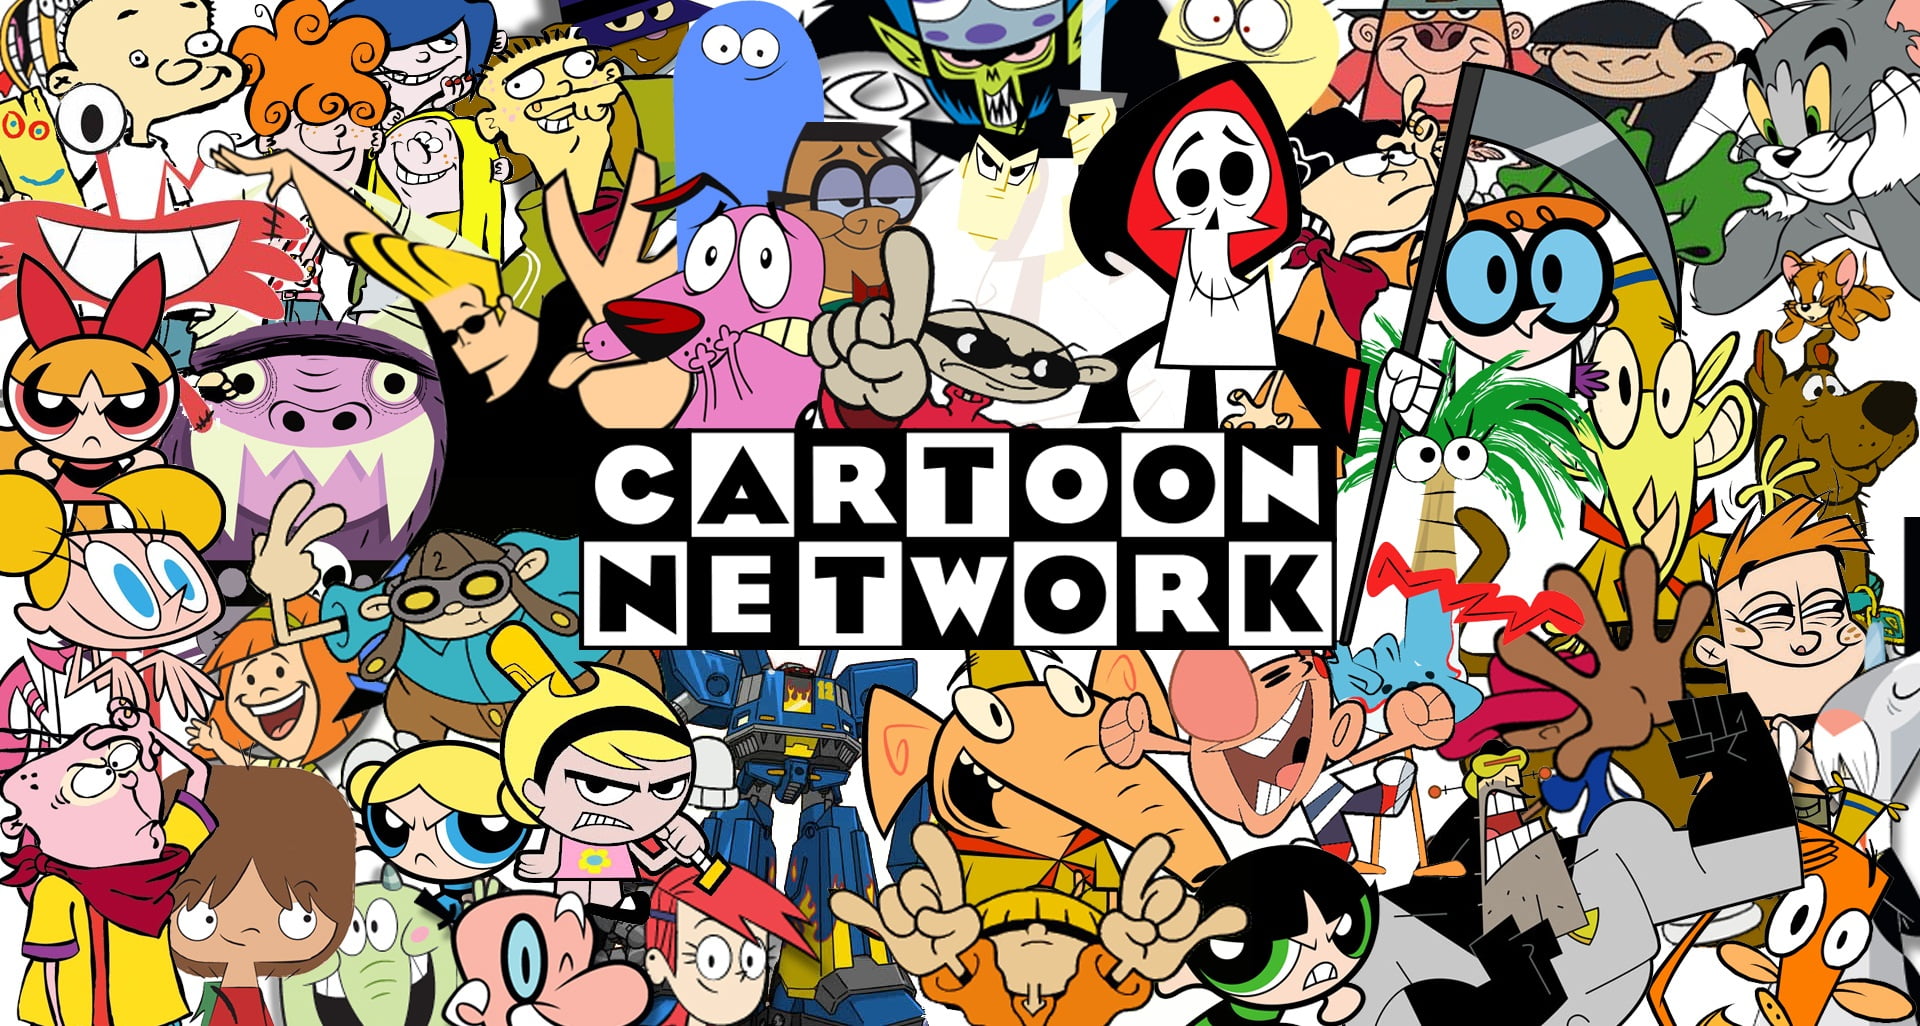 Cartoon Network Background, Cartoon Network doodle art, Cartoons